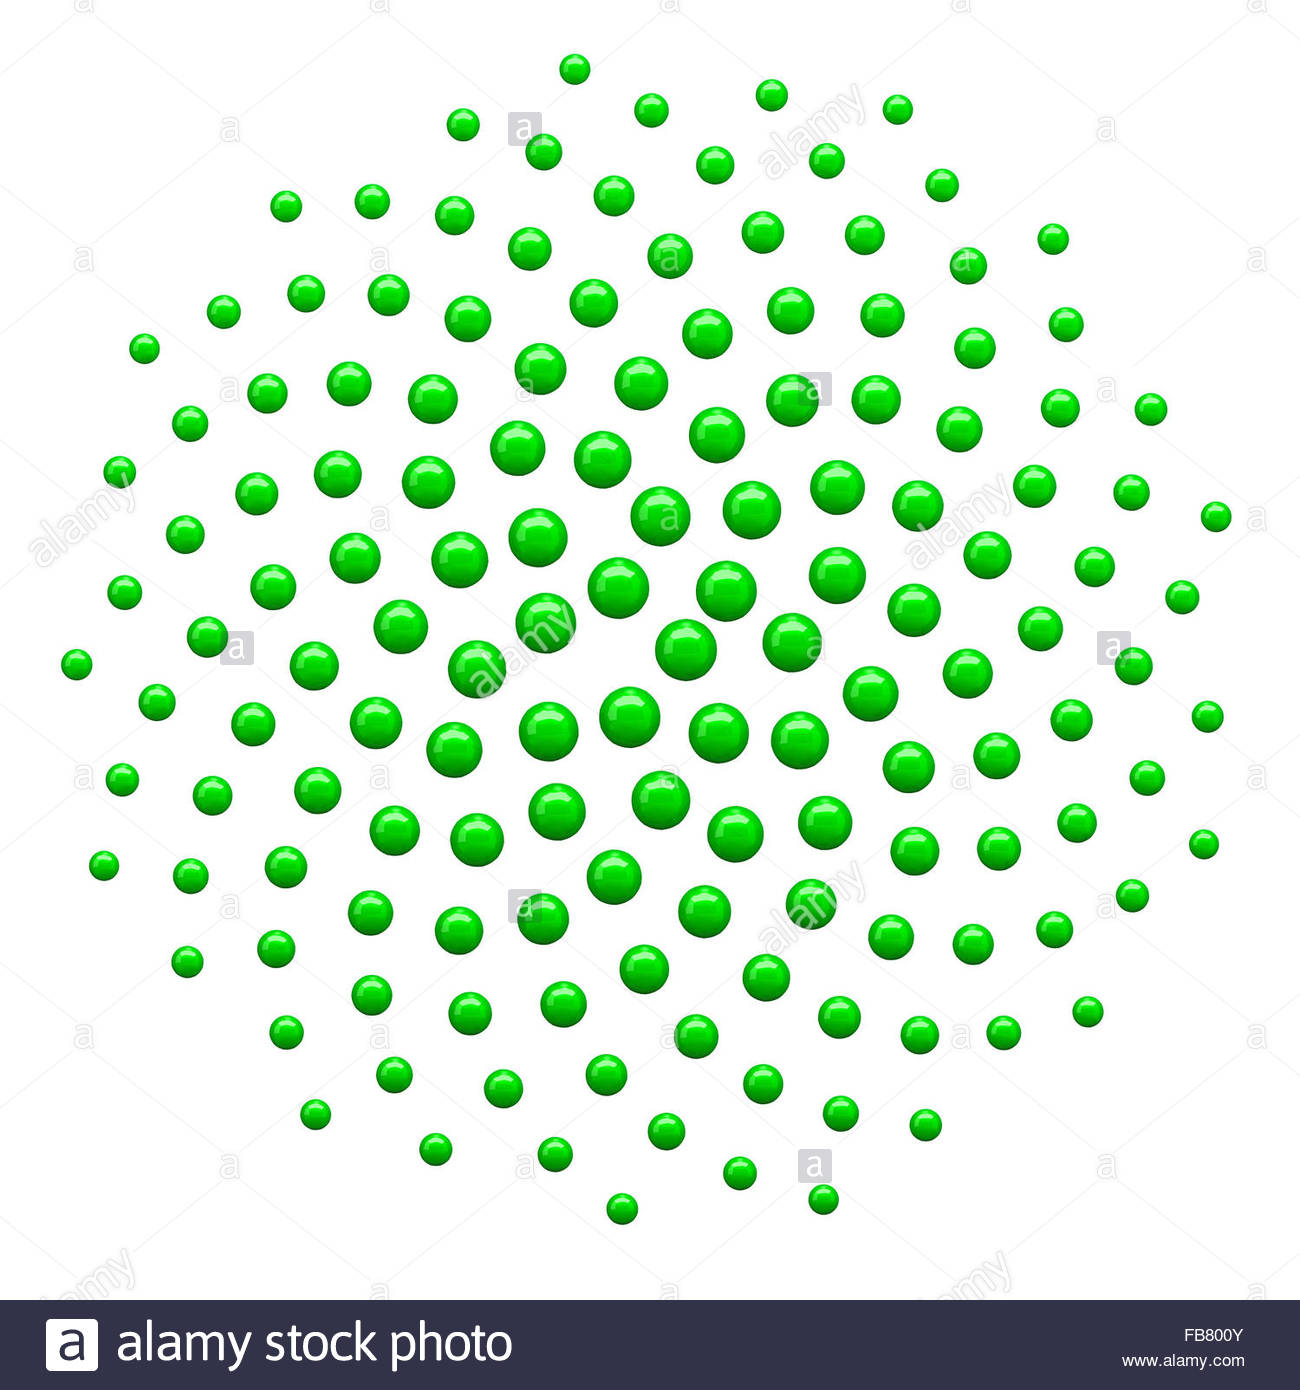 Royalty free clipart illustration of a 3d green spiral fibonacci mathematics dot pattern, on a white background.